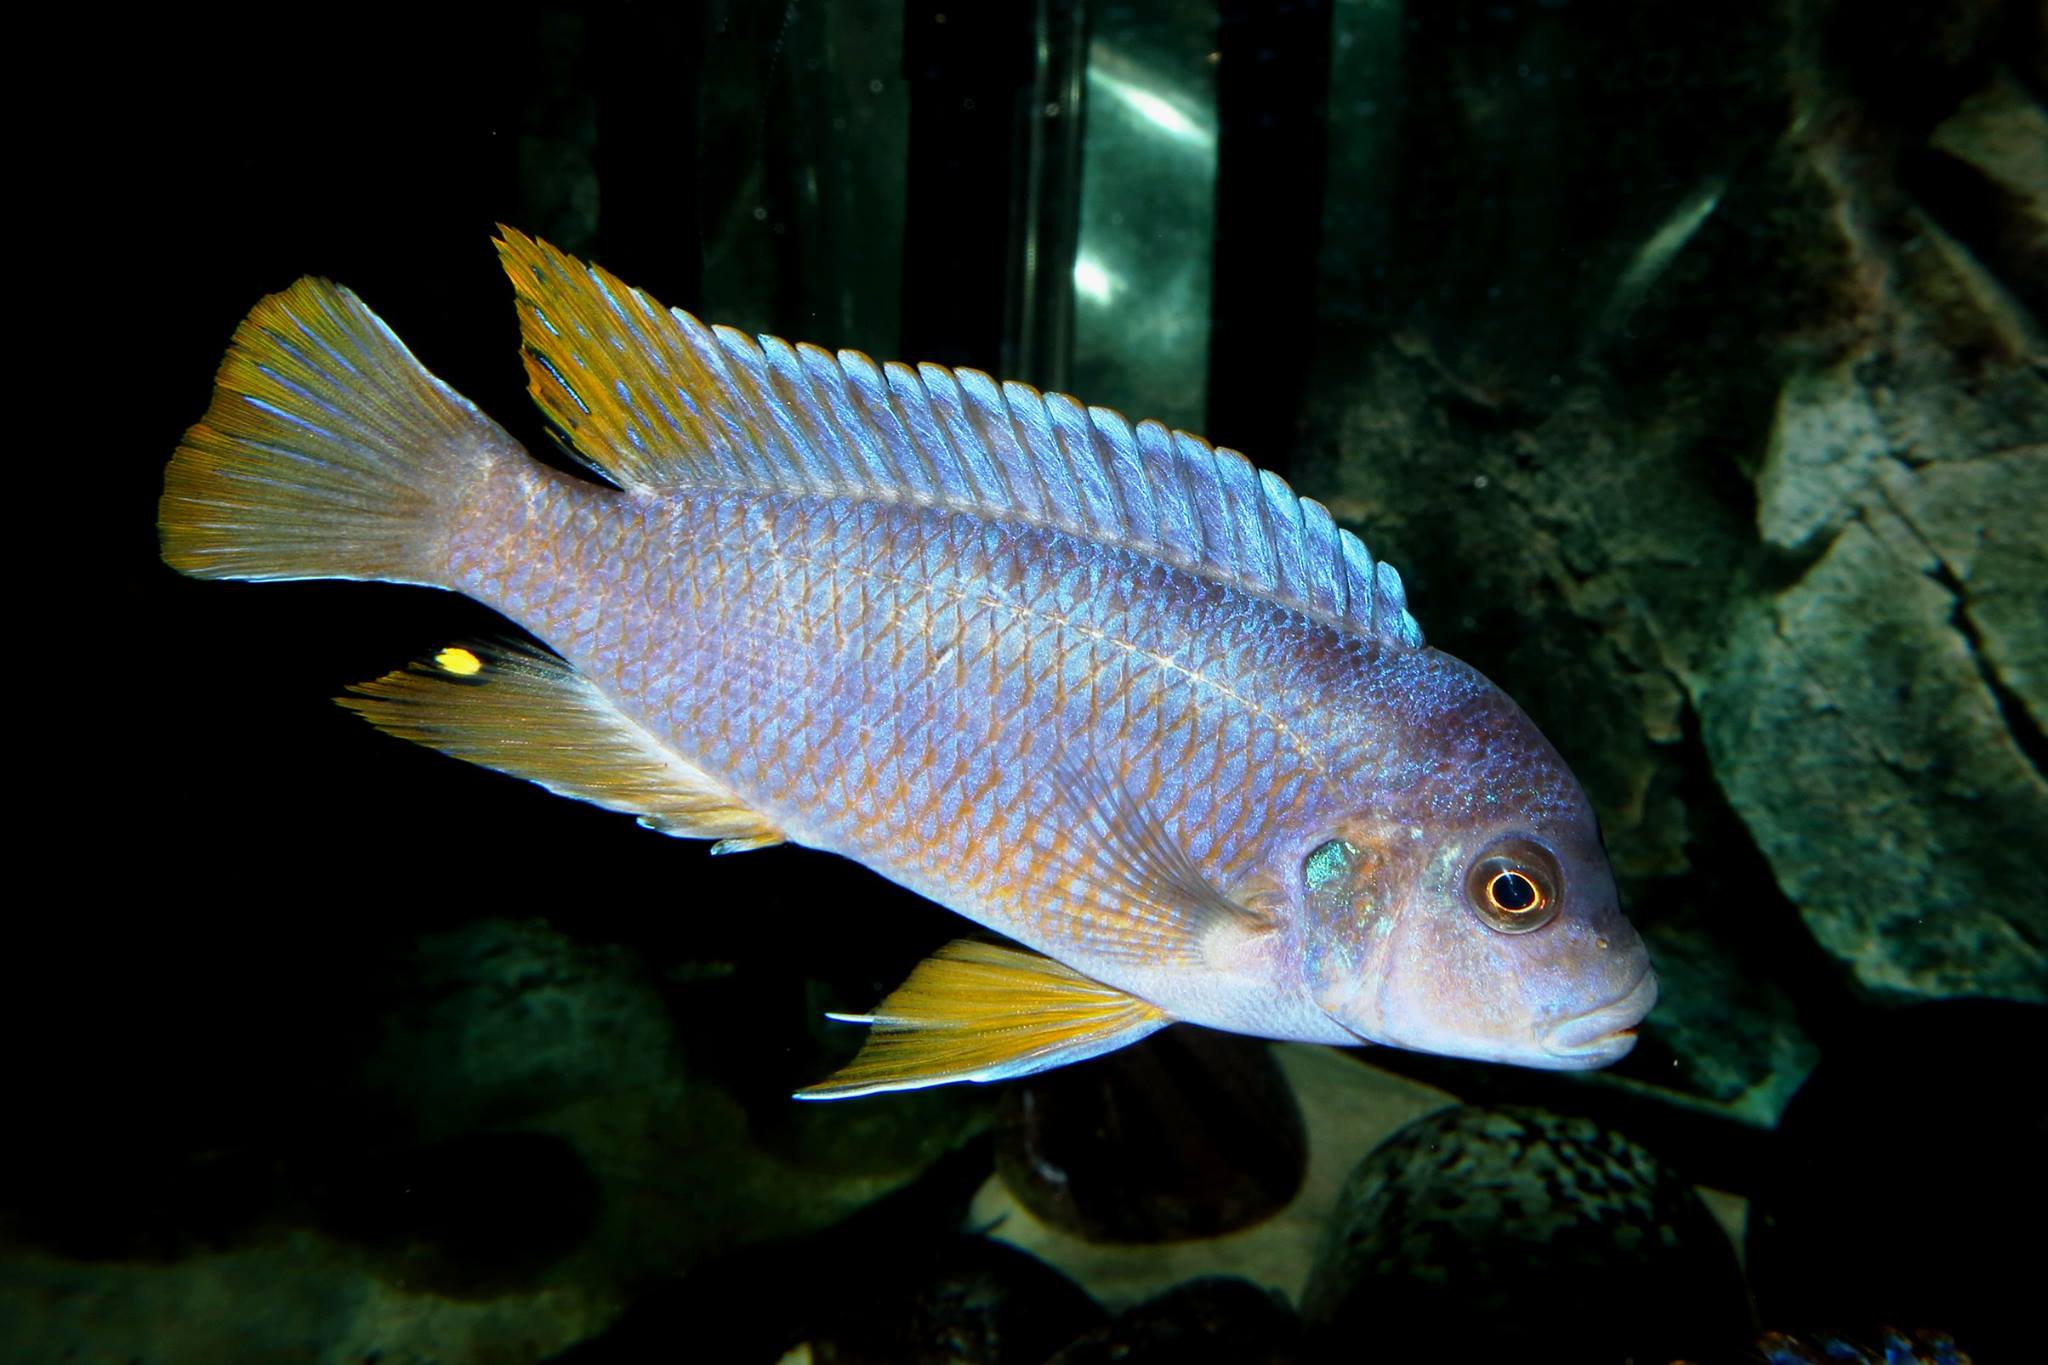 Pseudotropheus sp. "aggressive yellow fin"